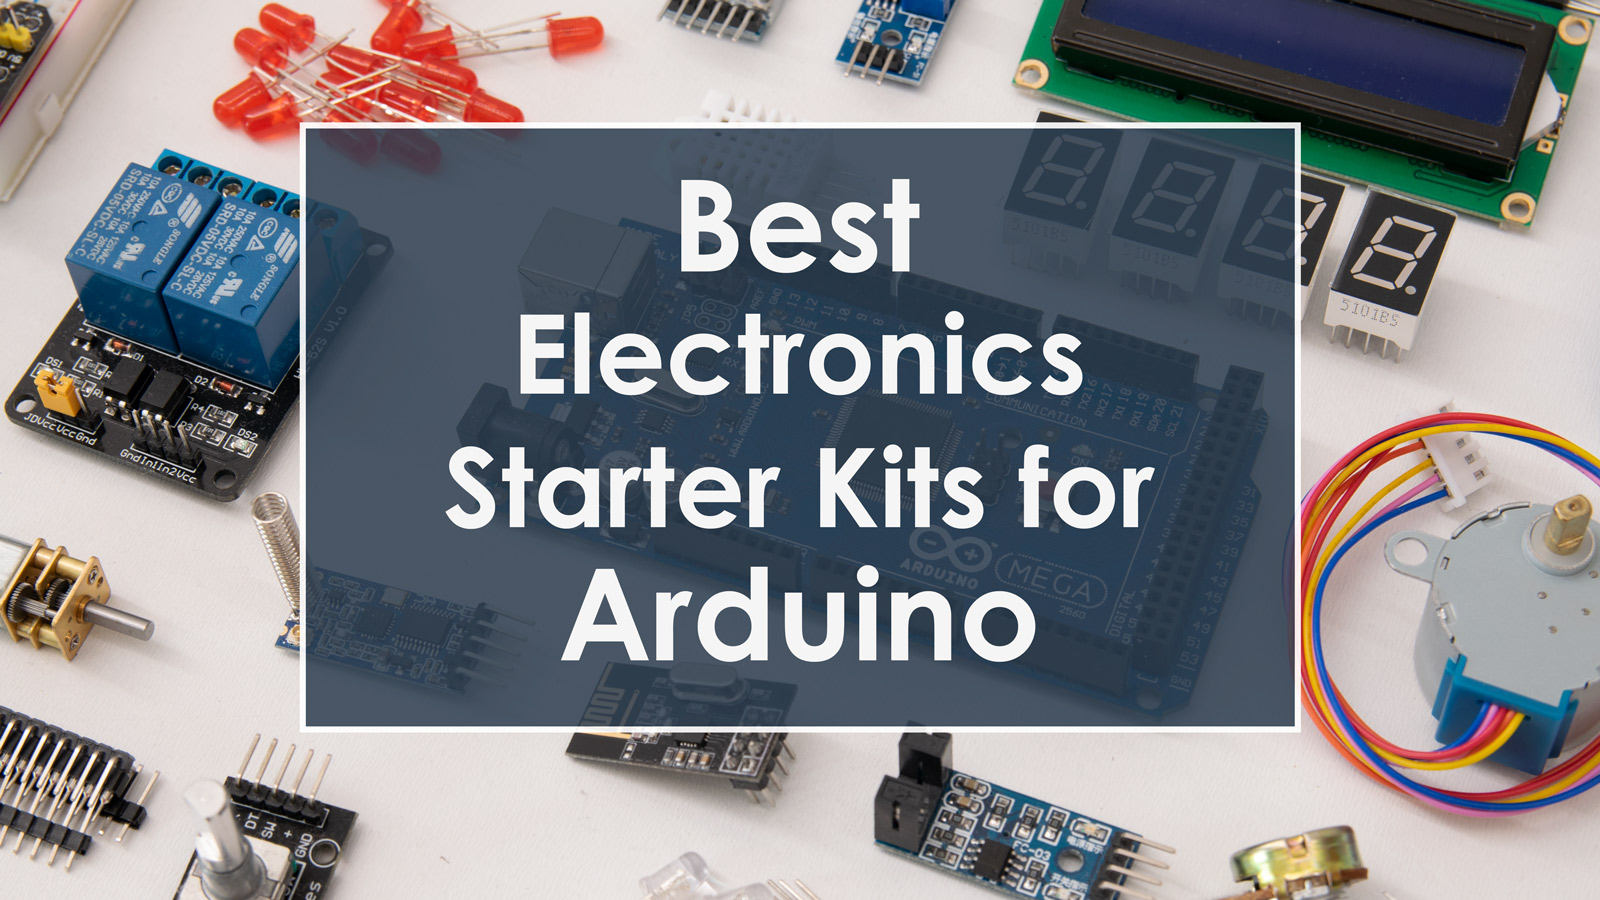 Arduino Unboxing: Original Arduino Starter Kit vs Elegoo Uno R3 Starter Kit  